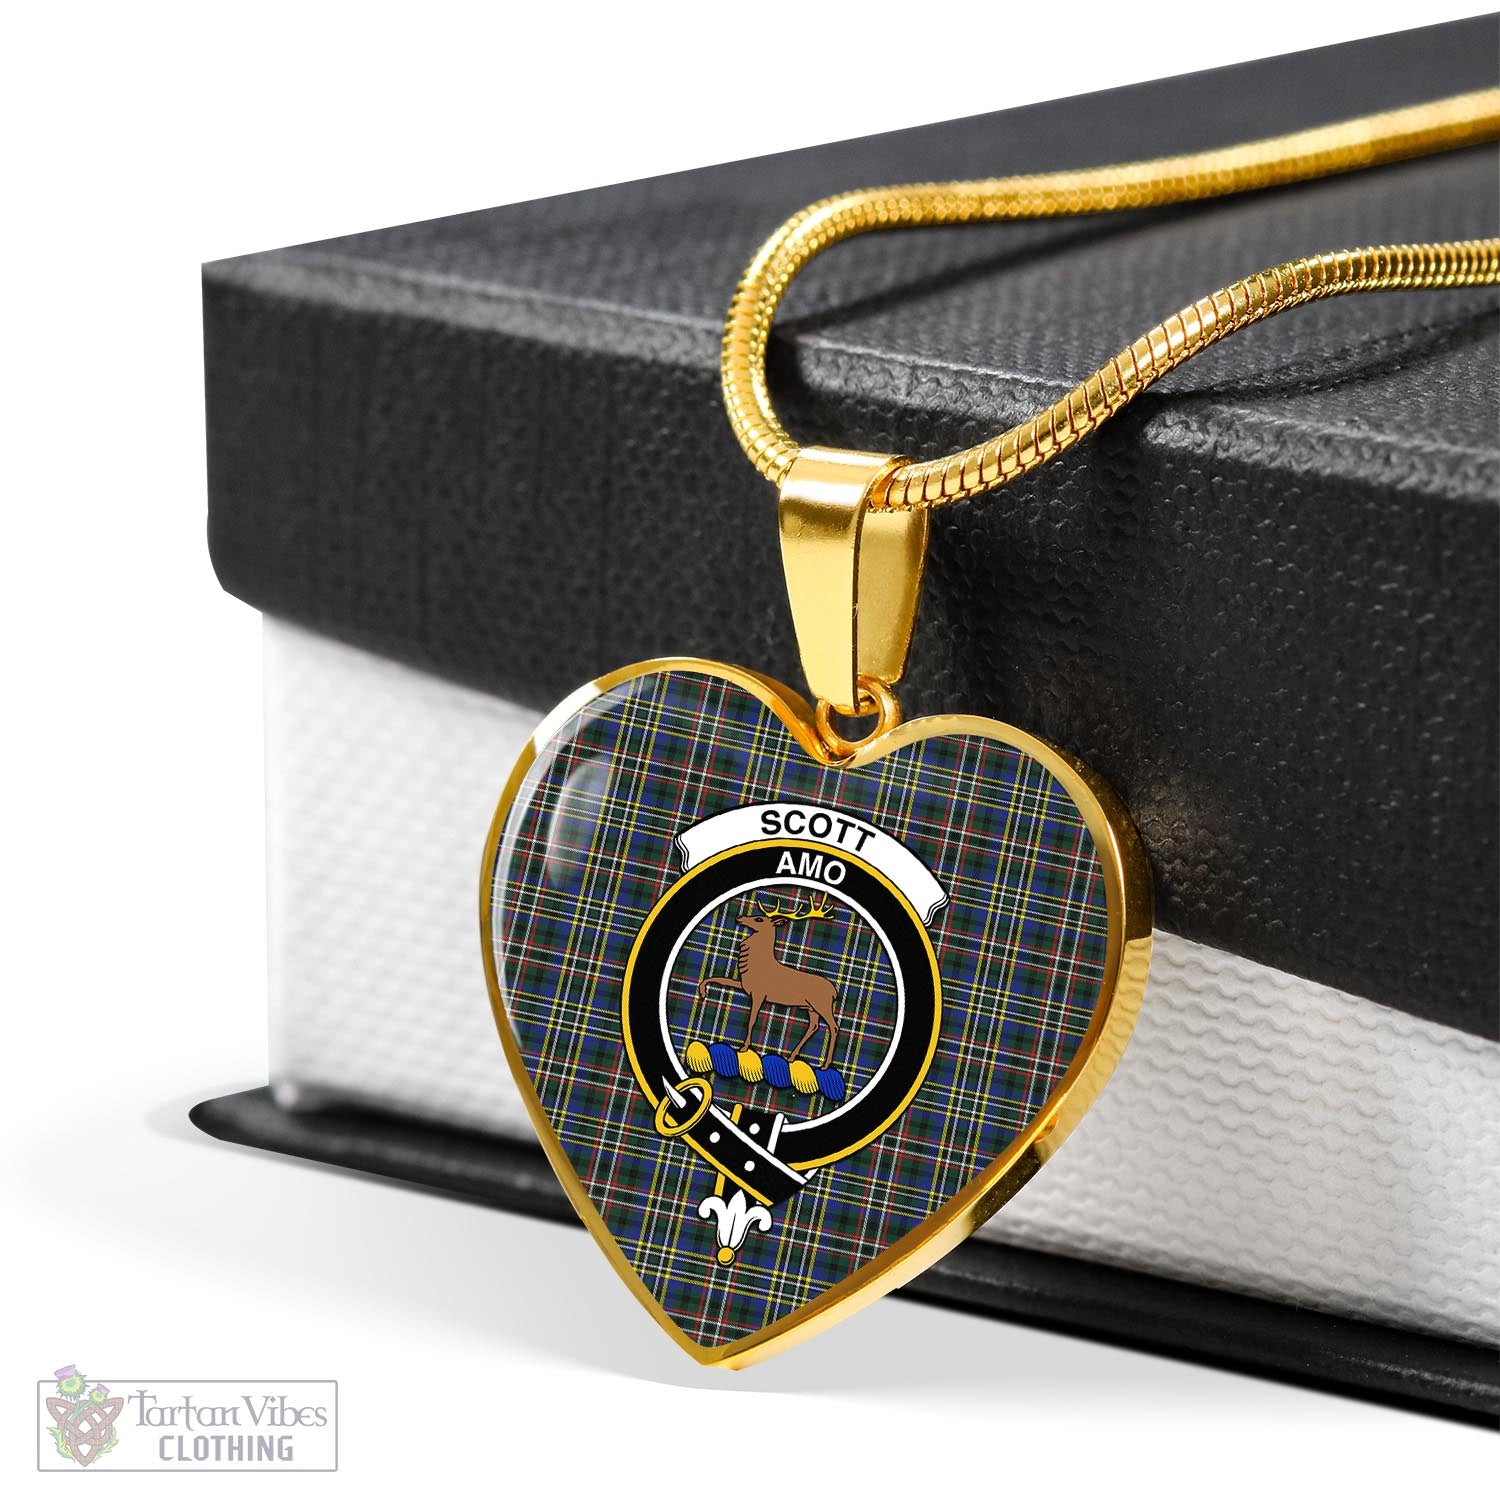 Tartan Vibes Clothing Scott Green Modern Tartan Heart Necklace with Family Crest